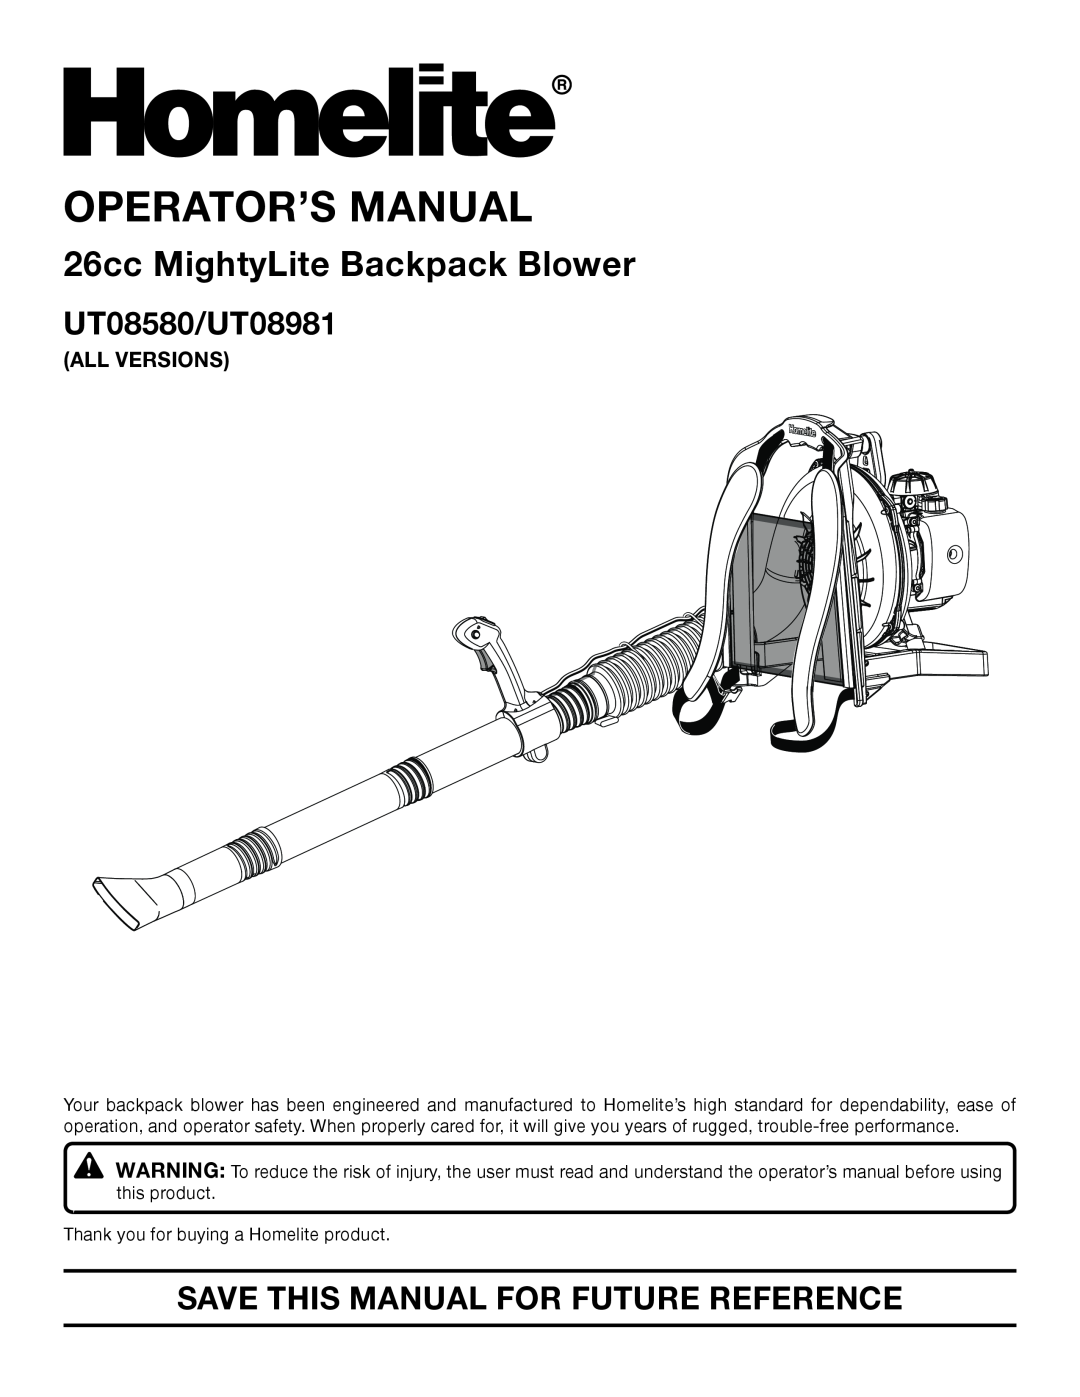 Homelite manual Operator’S Manual, 26cc MightyLite Backpack Blower, UT08580/UT08981, All Versions 